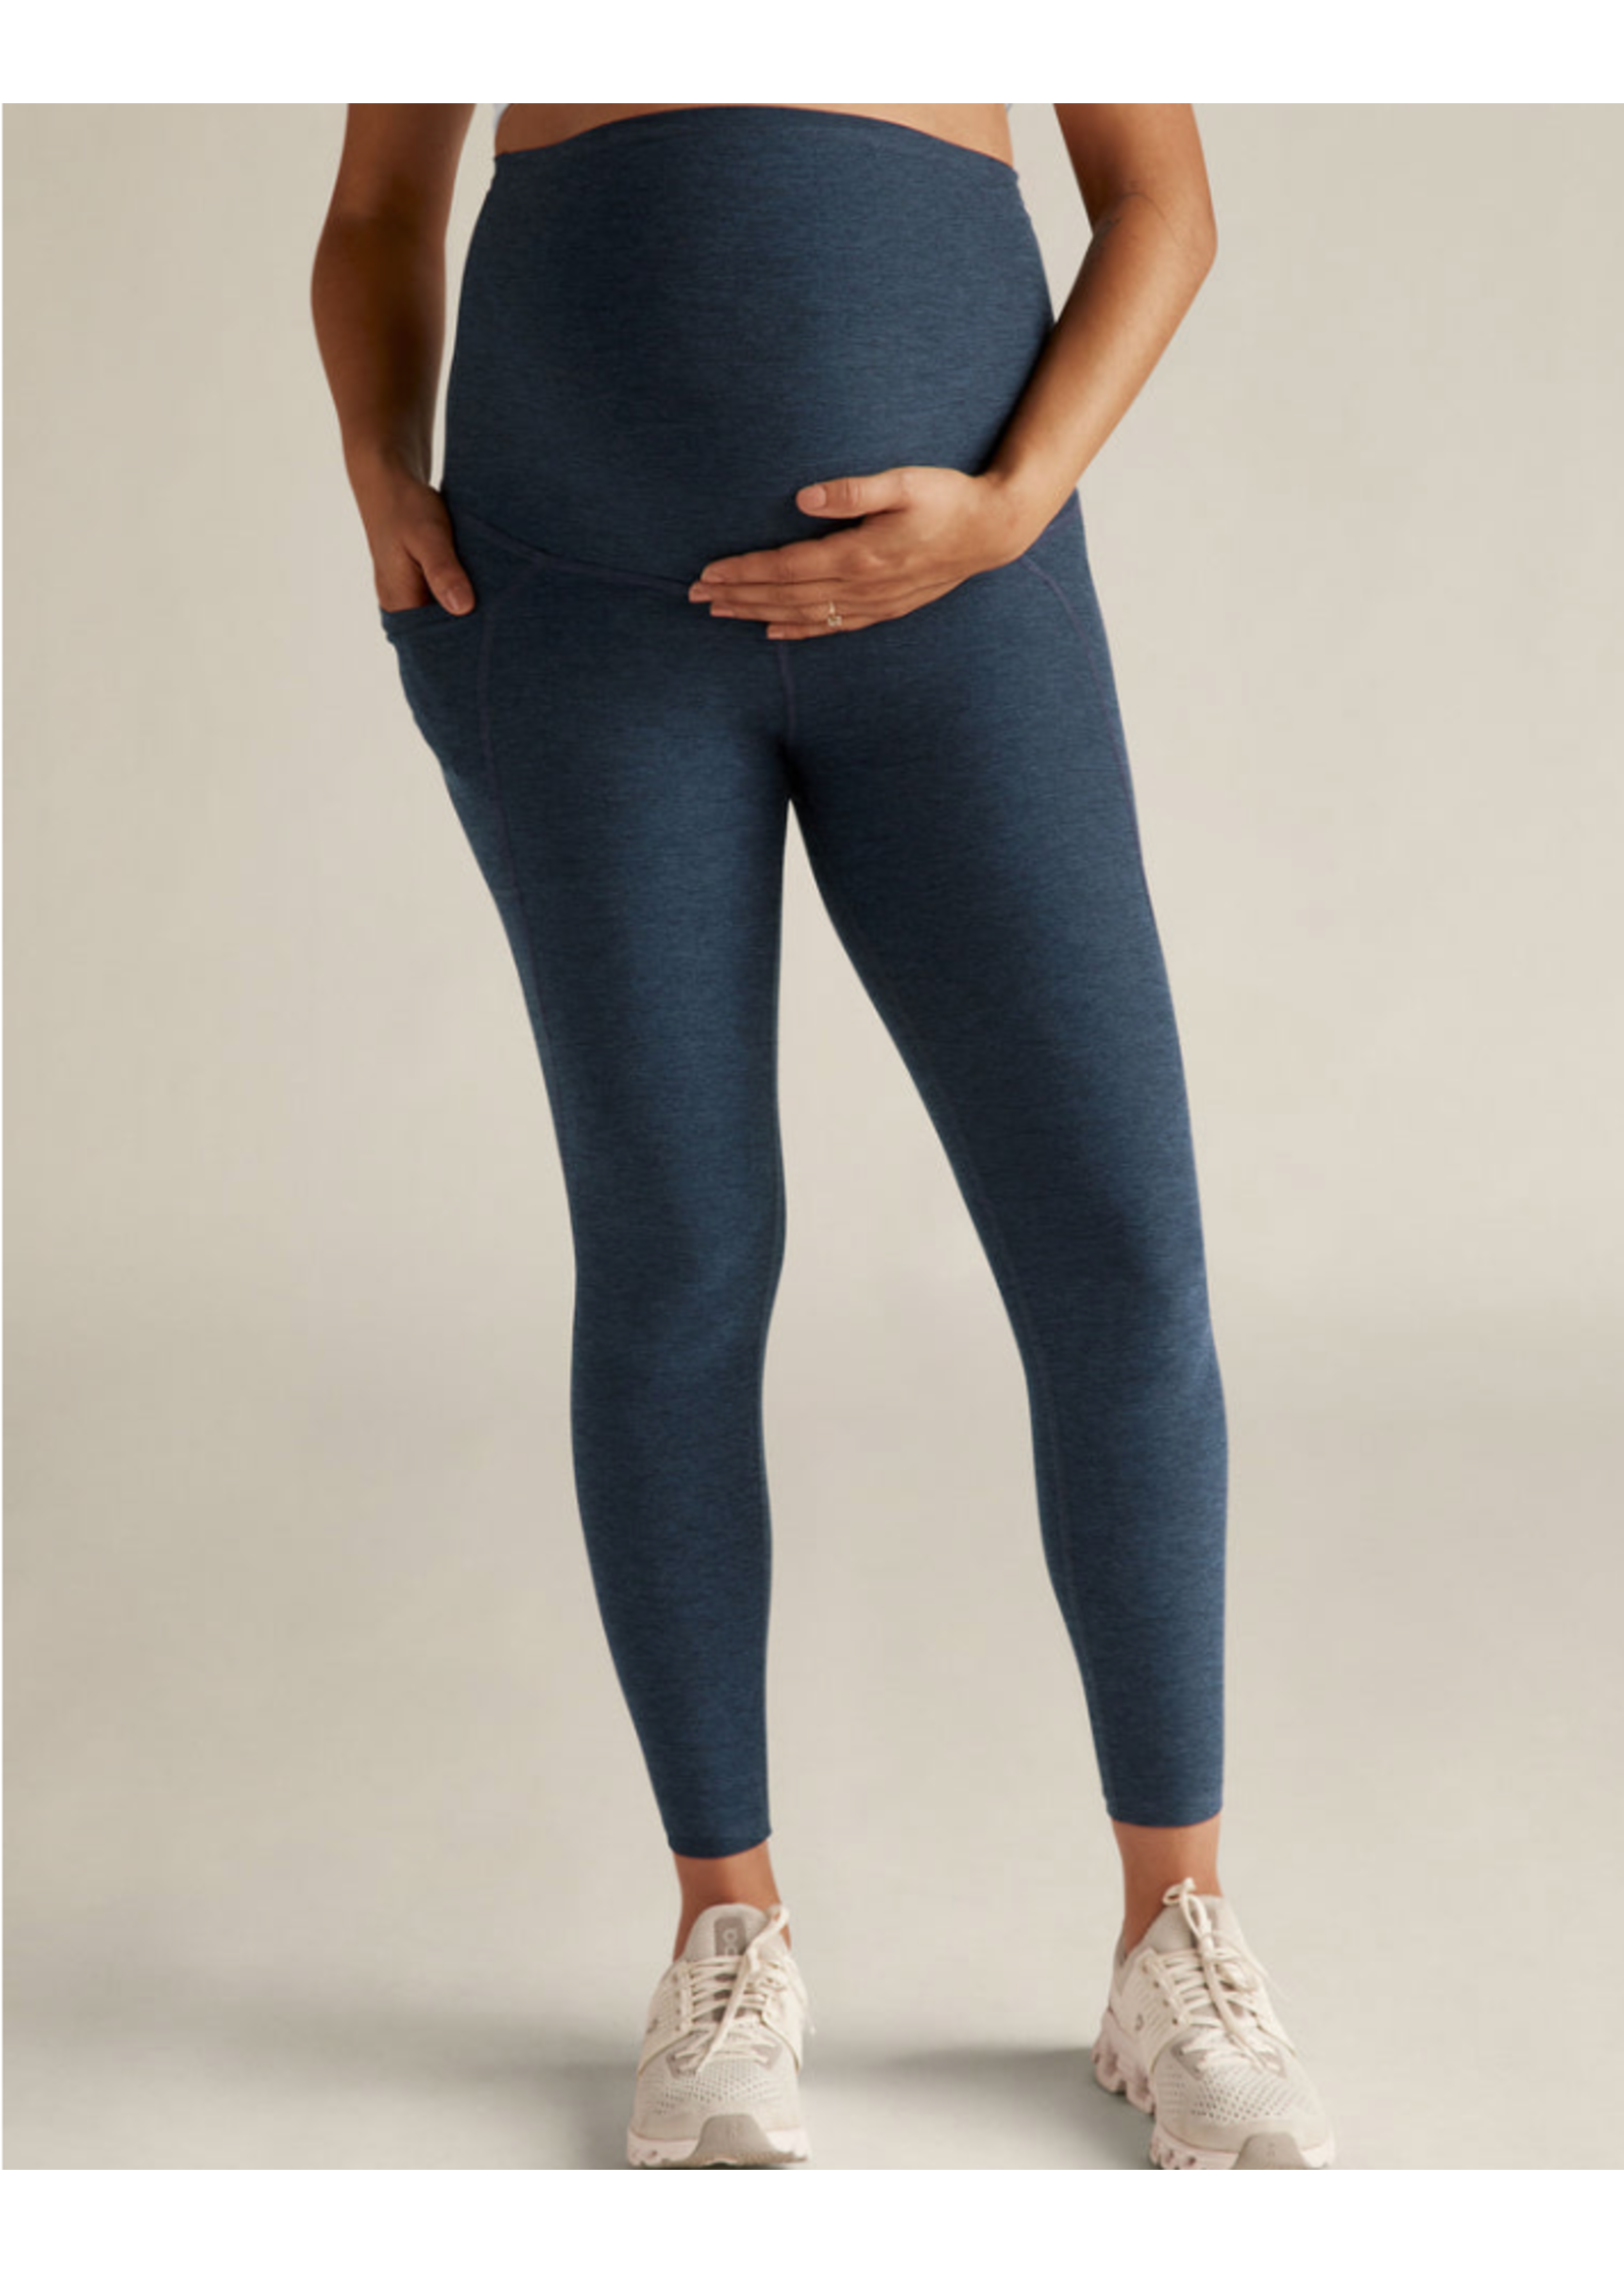 NWD $108 Beyond Bump Yoga [ Medium ] Heather Rib Maternity Midi Legging  #T1451